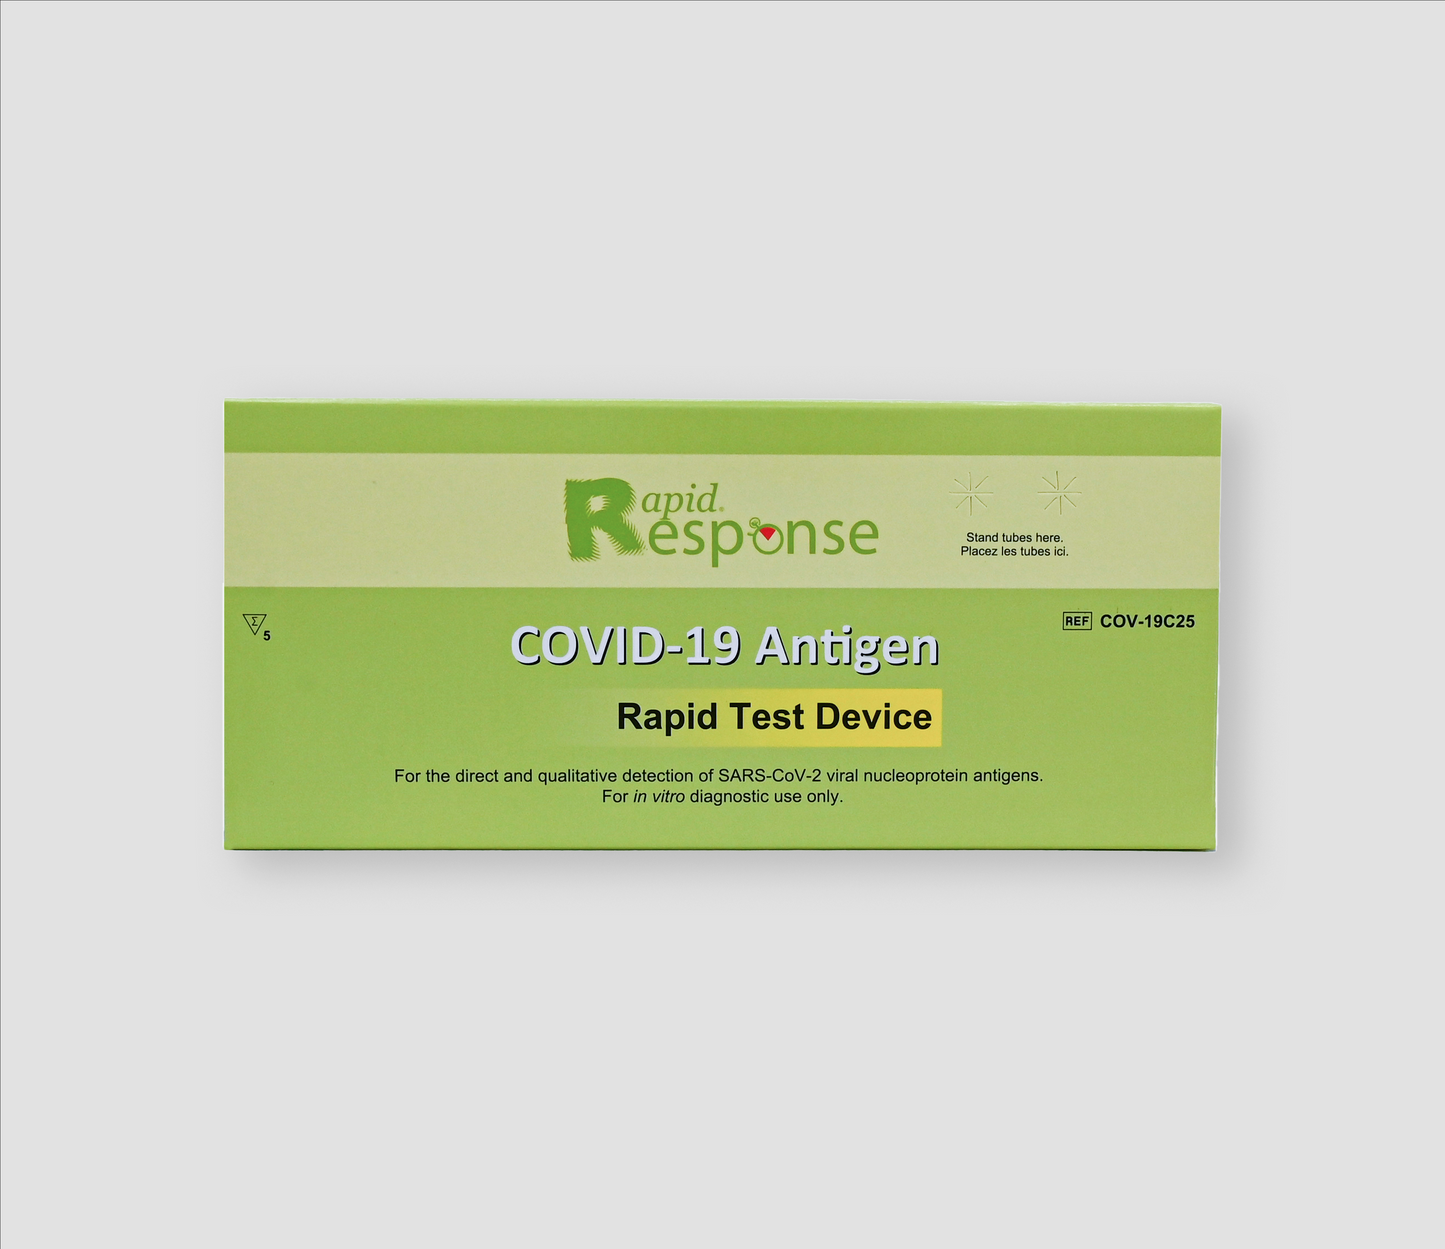 BTNX Rapid Response Covid-19 Antigen Test Kit (5 tests)